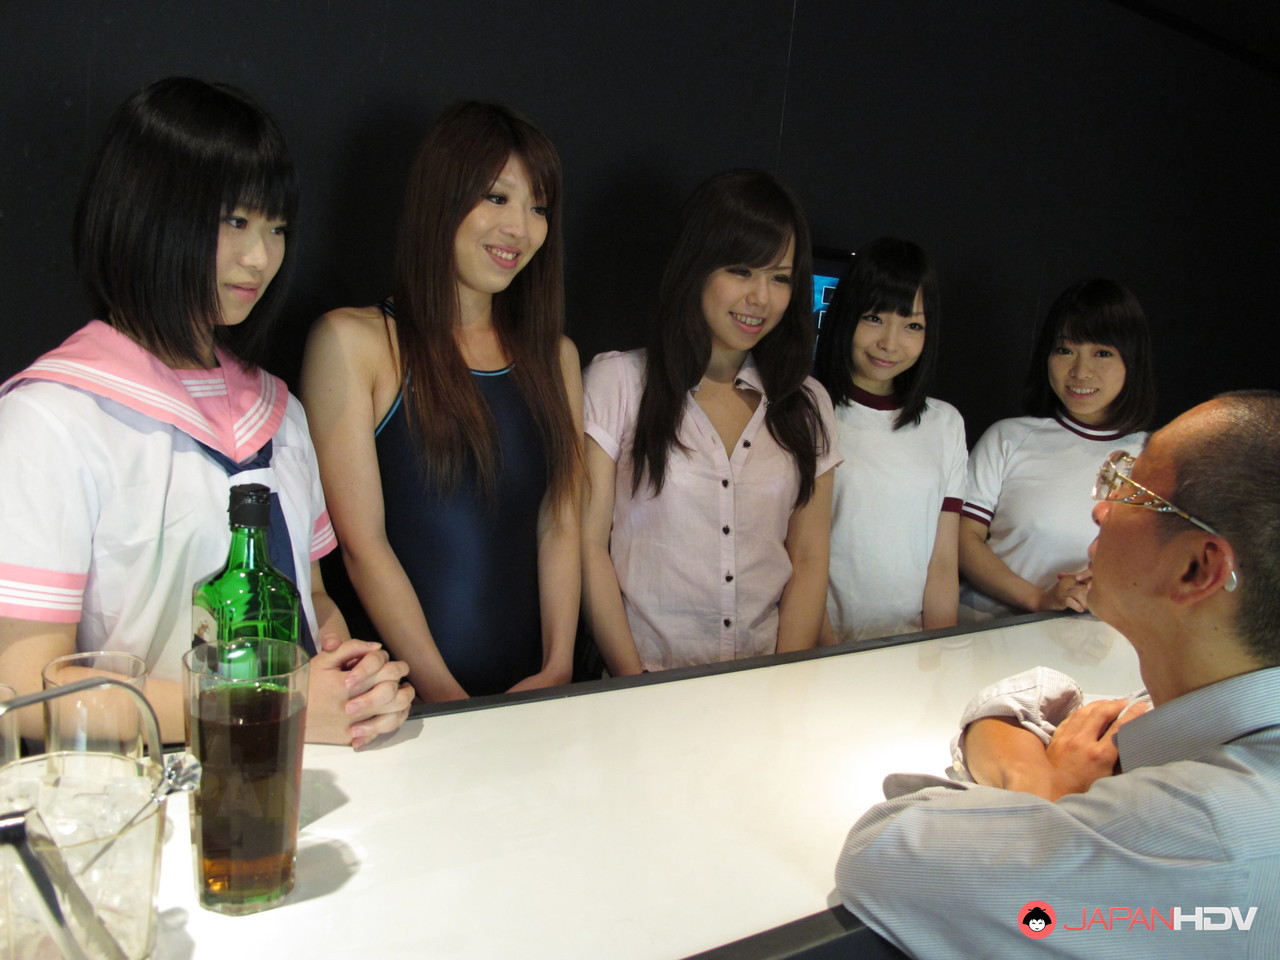 Cute Japanese teens participate in a wild Asian orgy in the nightclub foto porno #424451908 | Japan HDV Pics, Mio Kosaki, Seiko Ida, Yuri Sakura, Japanese, porno móvil